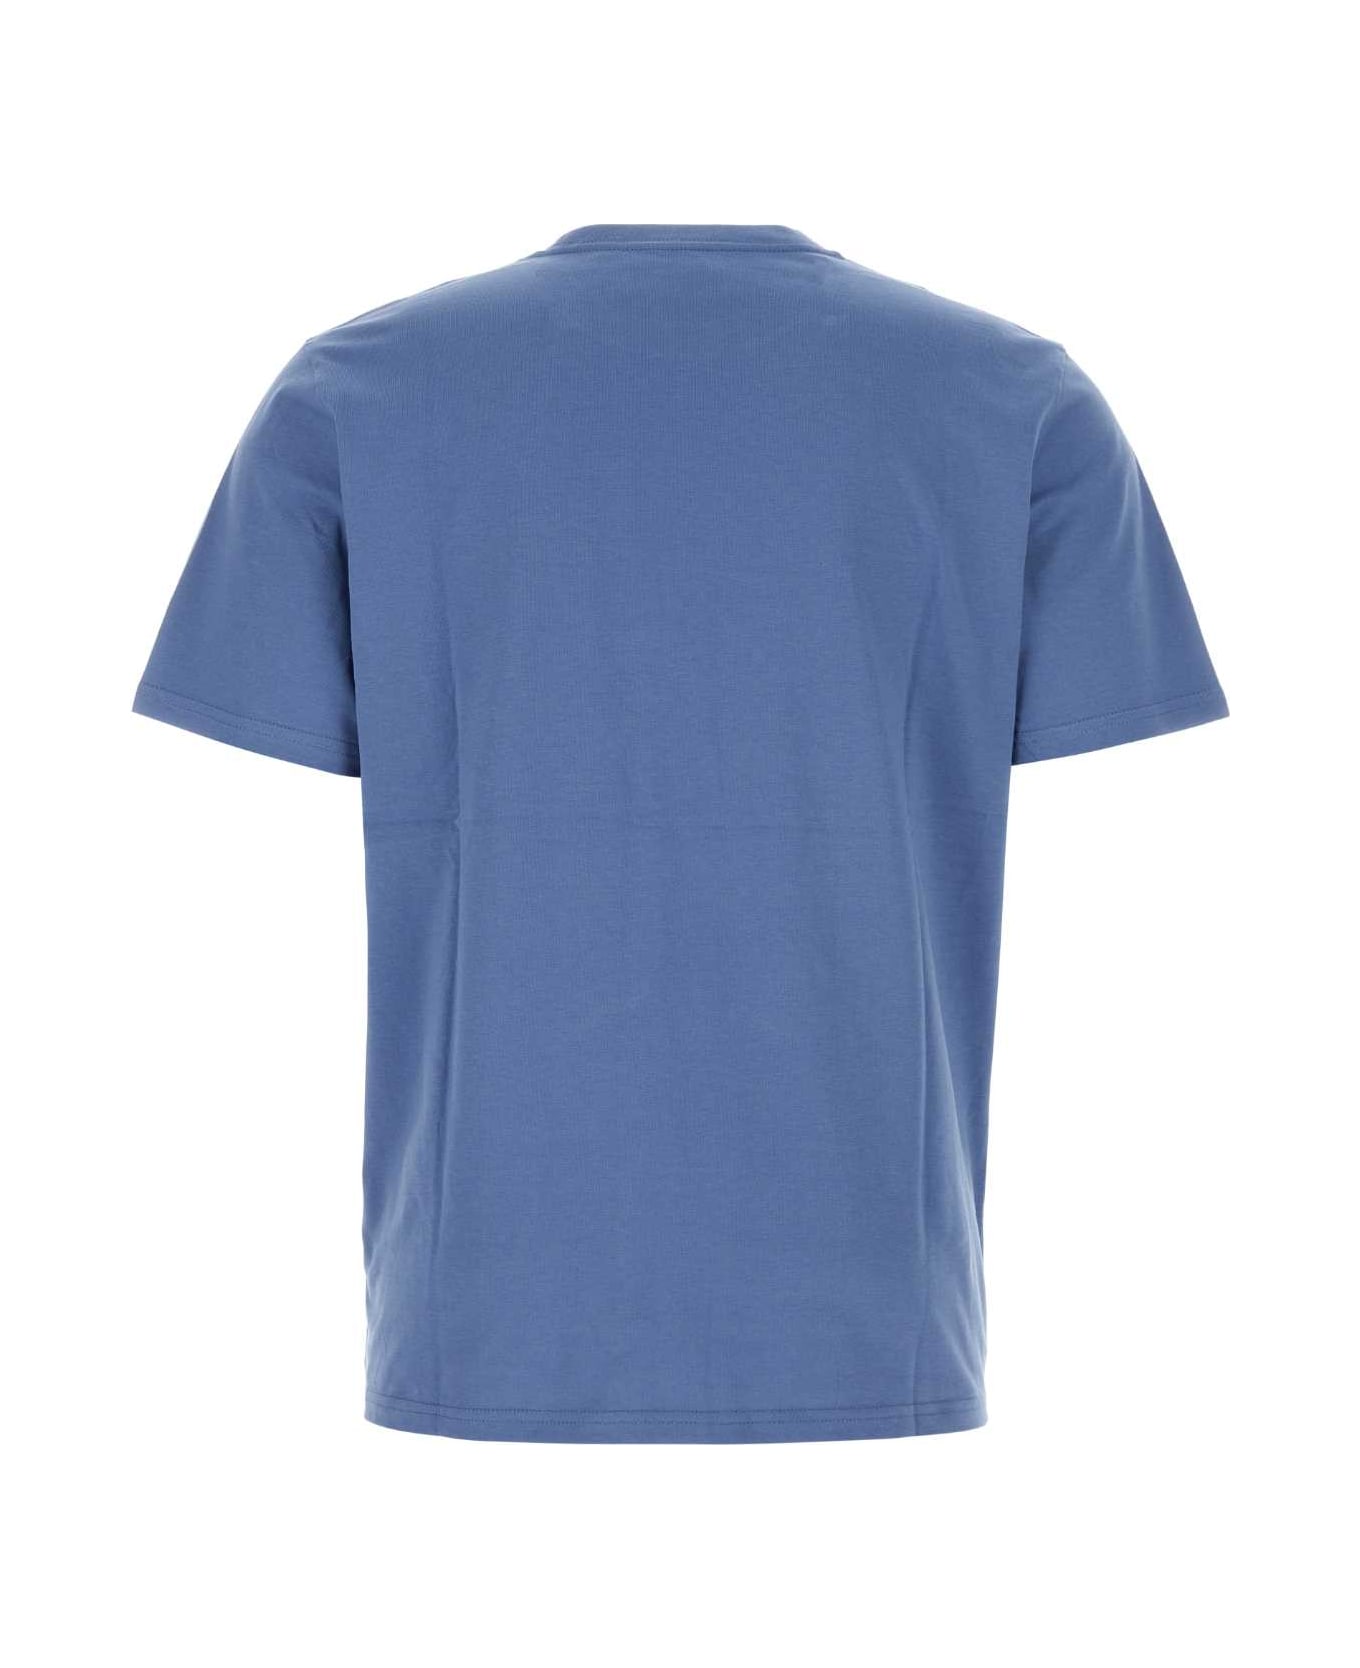 Carhartt Slate Blue Cotton S/s Pocket T-shirt - SORRENT